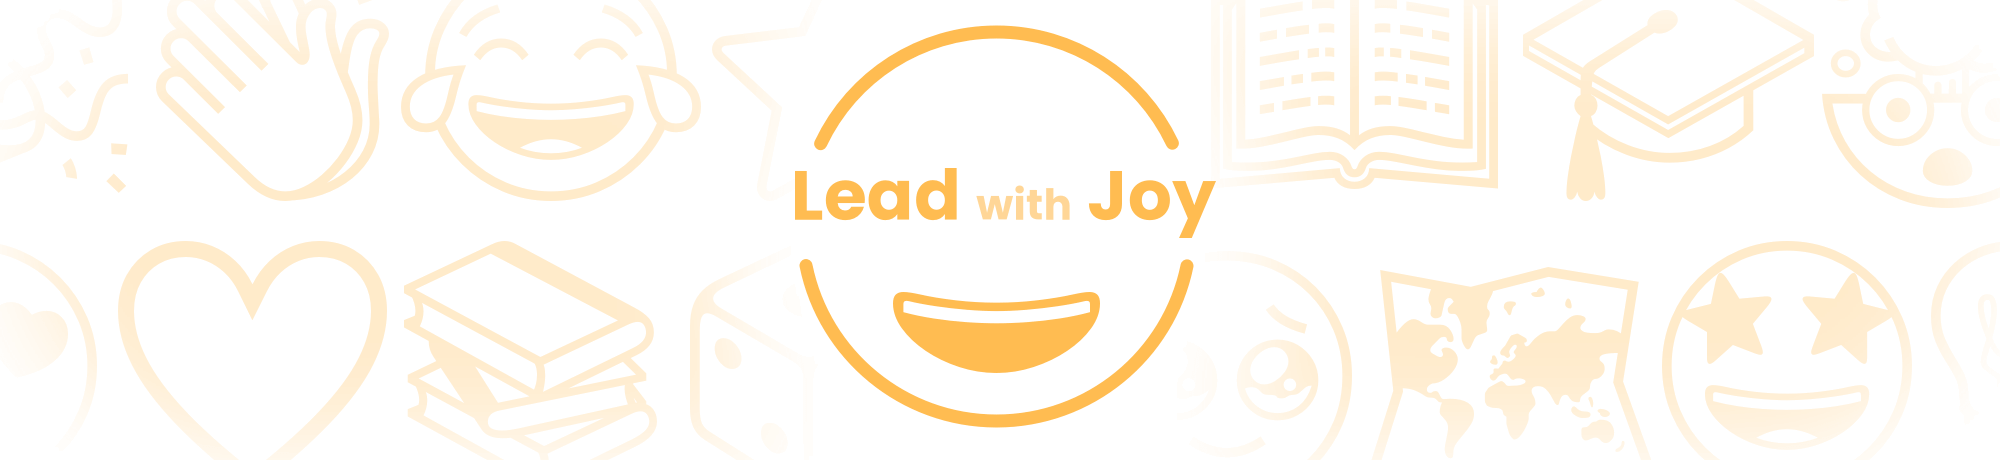 Lead with Joy logo